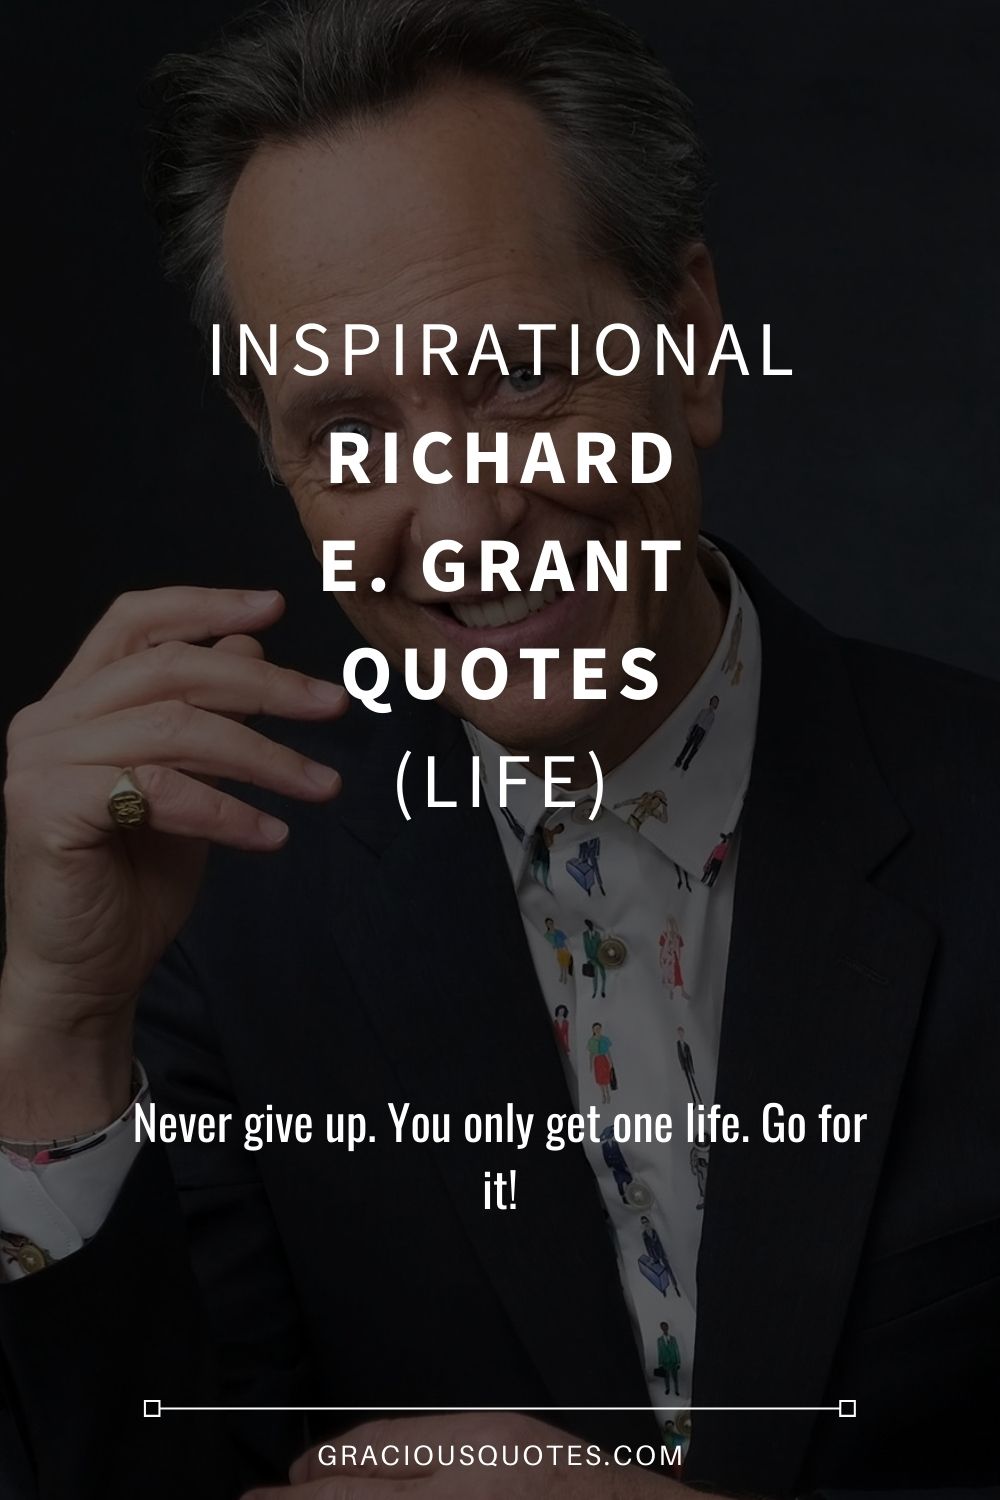 Inspirational Richard E. Grant Quotes (LIFE) - Gracious Quotes